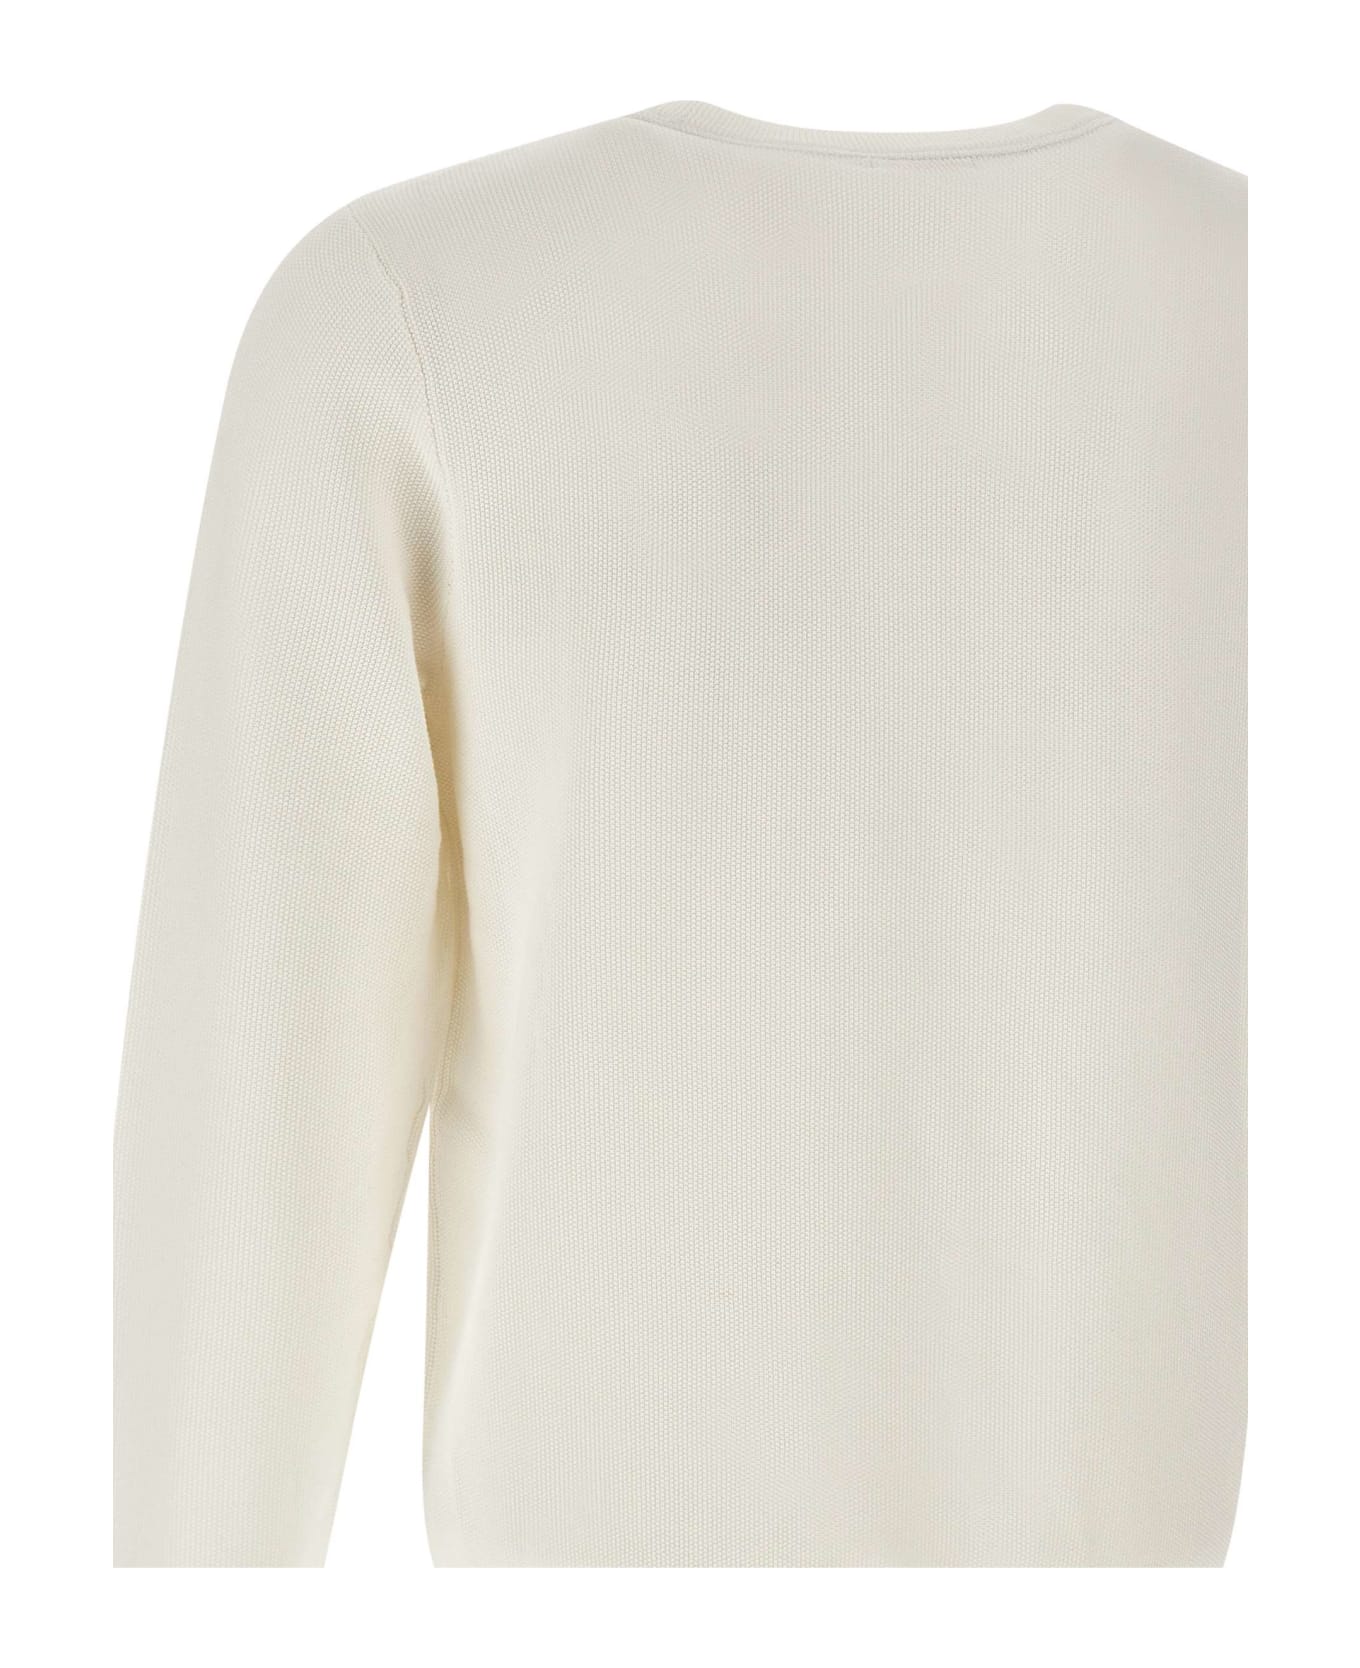 Sun 68 "round Vintage" Cotton Sweater - WHITE ニットウェア